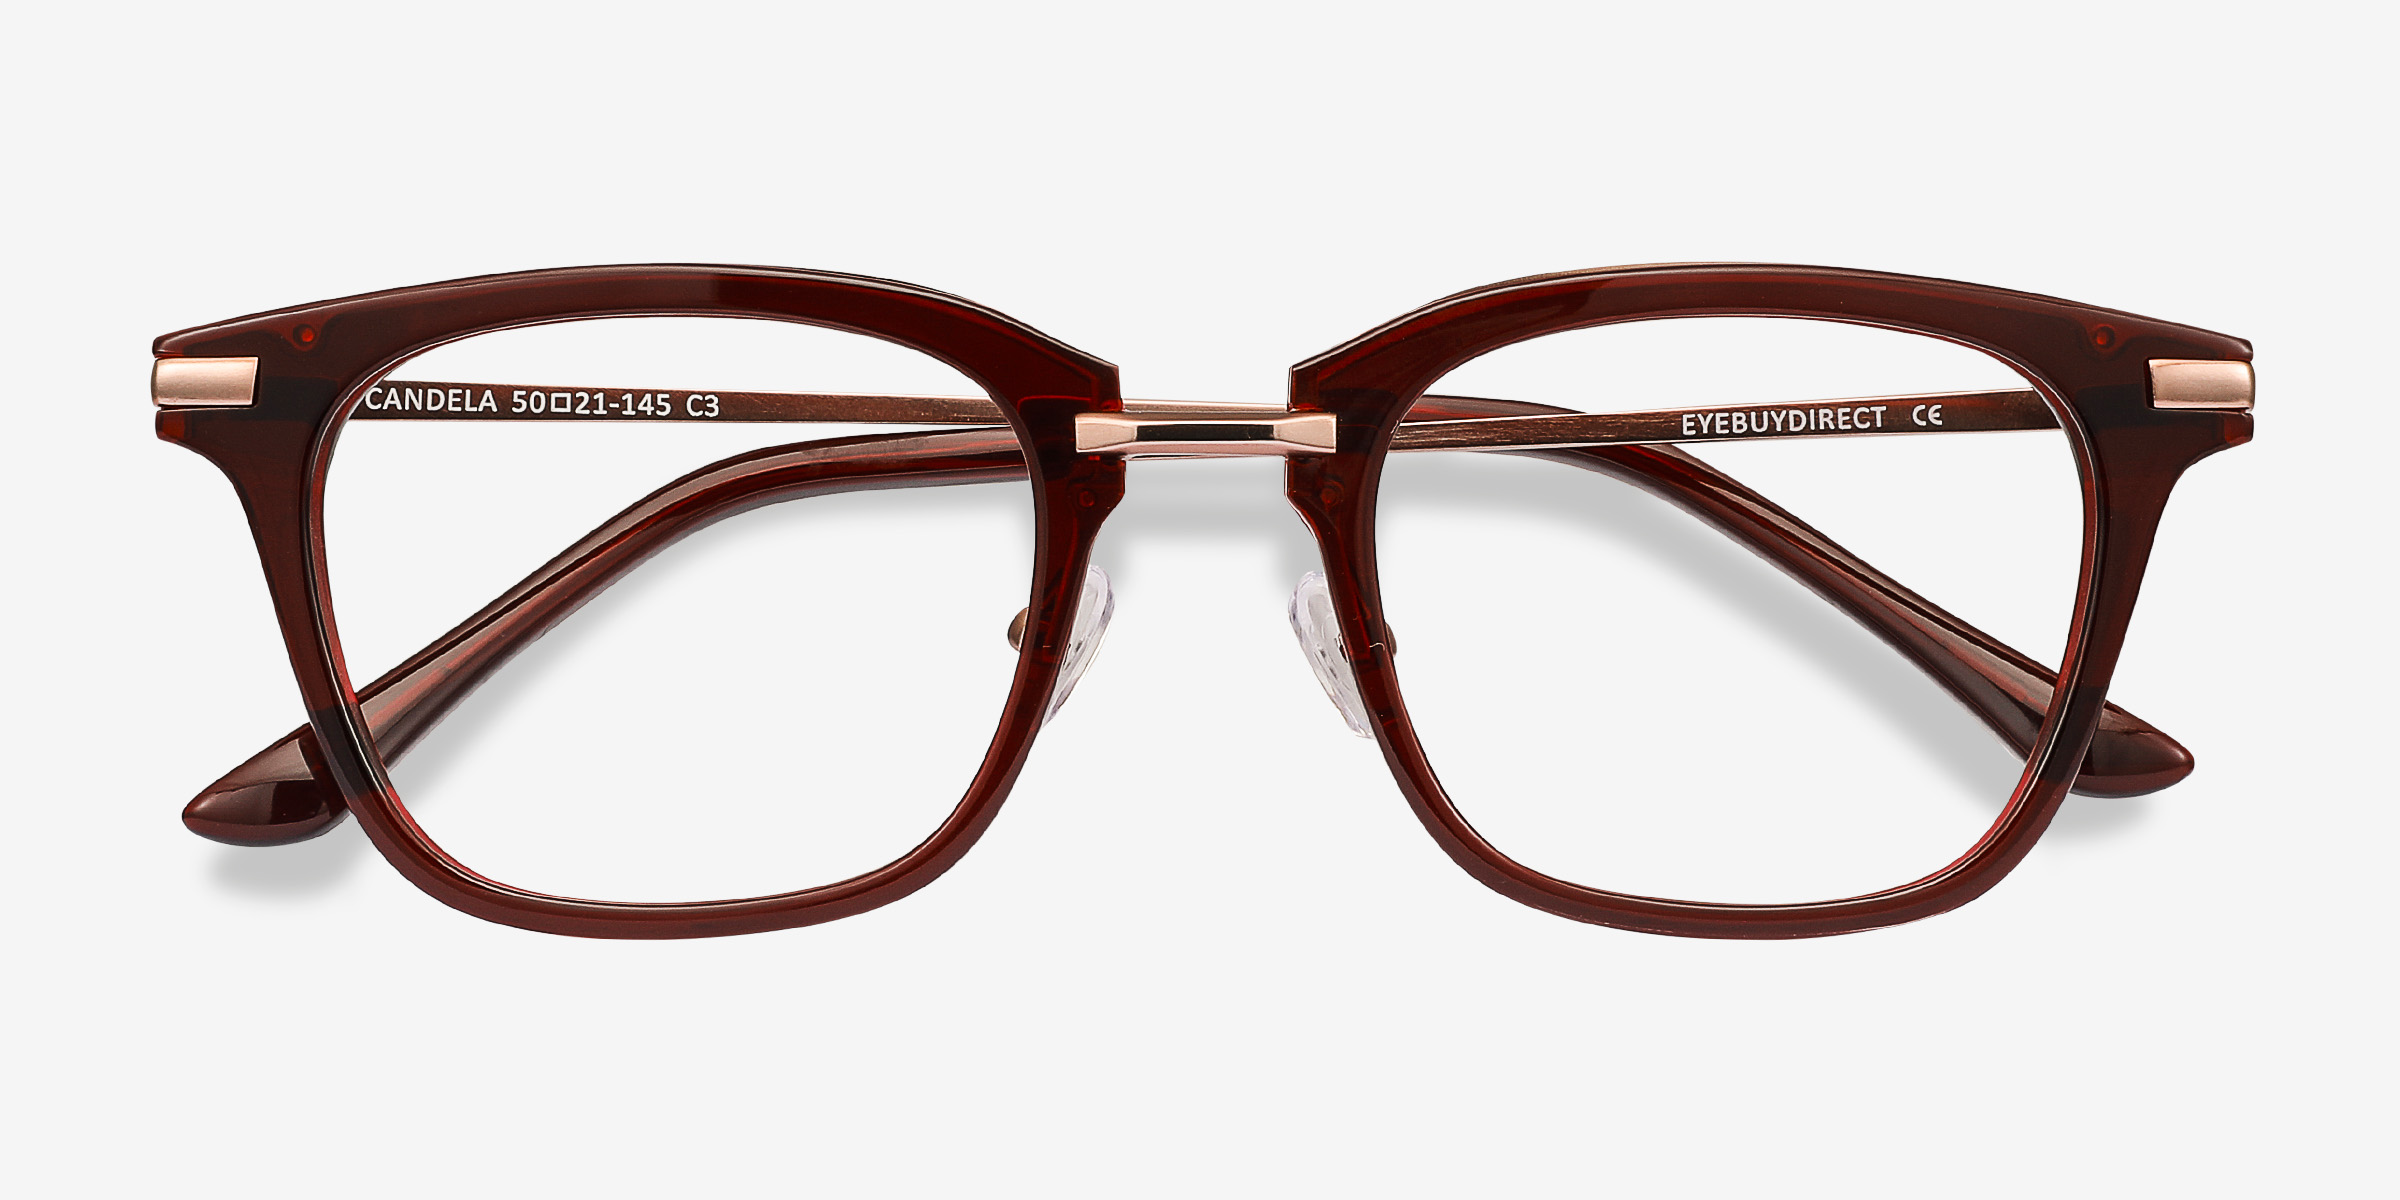 Candela Square Burgundy Glasses for Women | Eyebuydirect